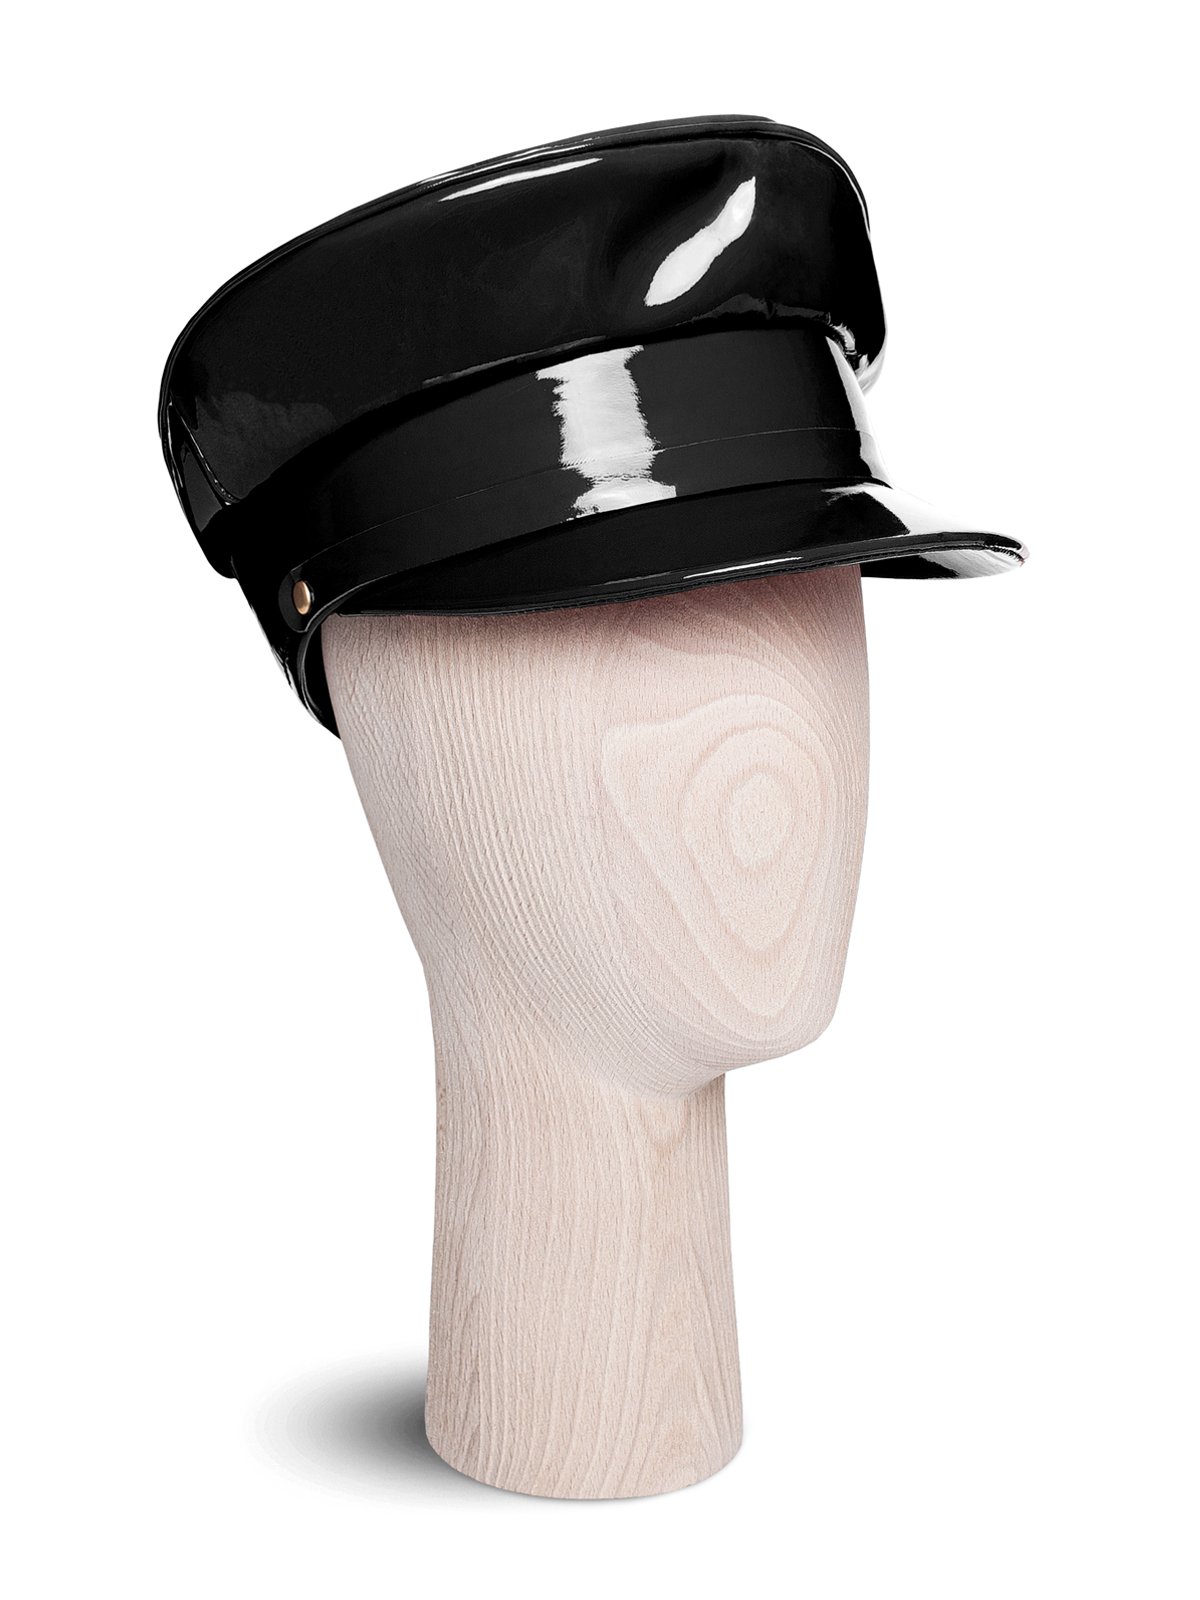 Officer Black Cap